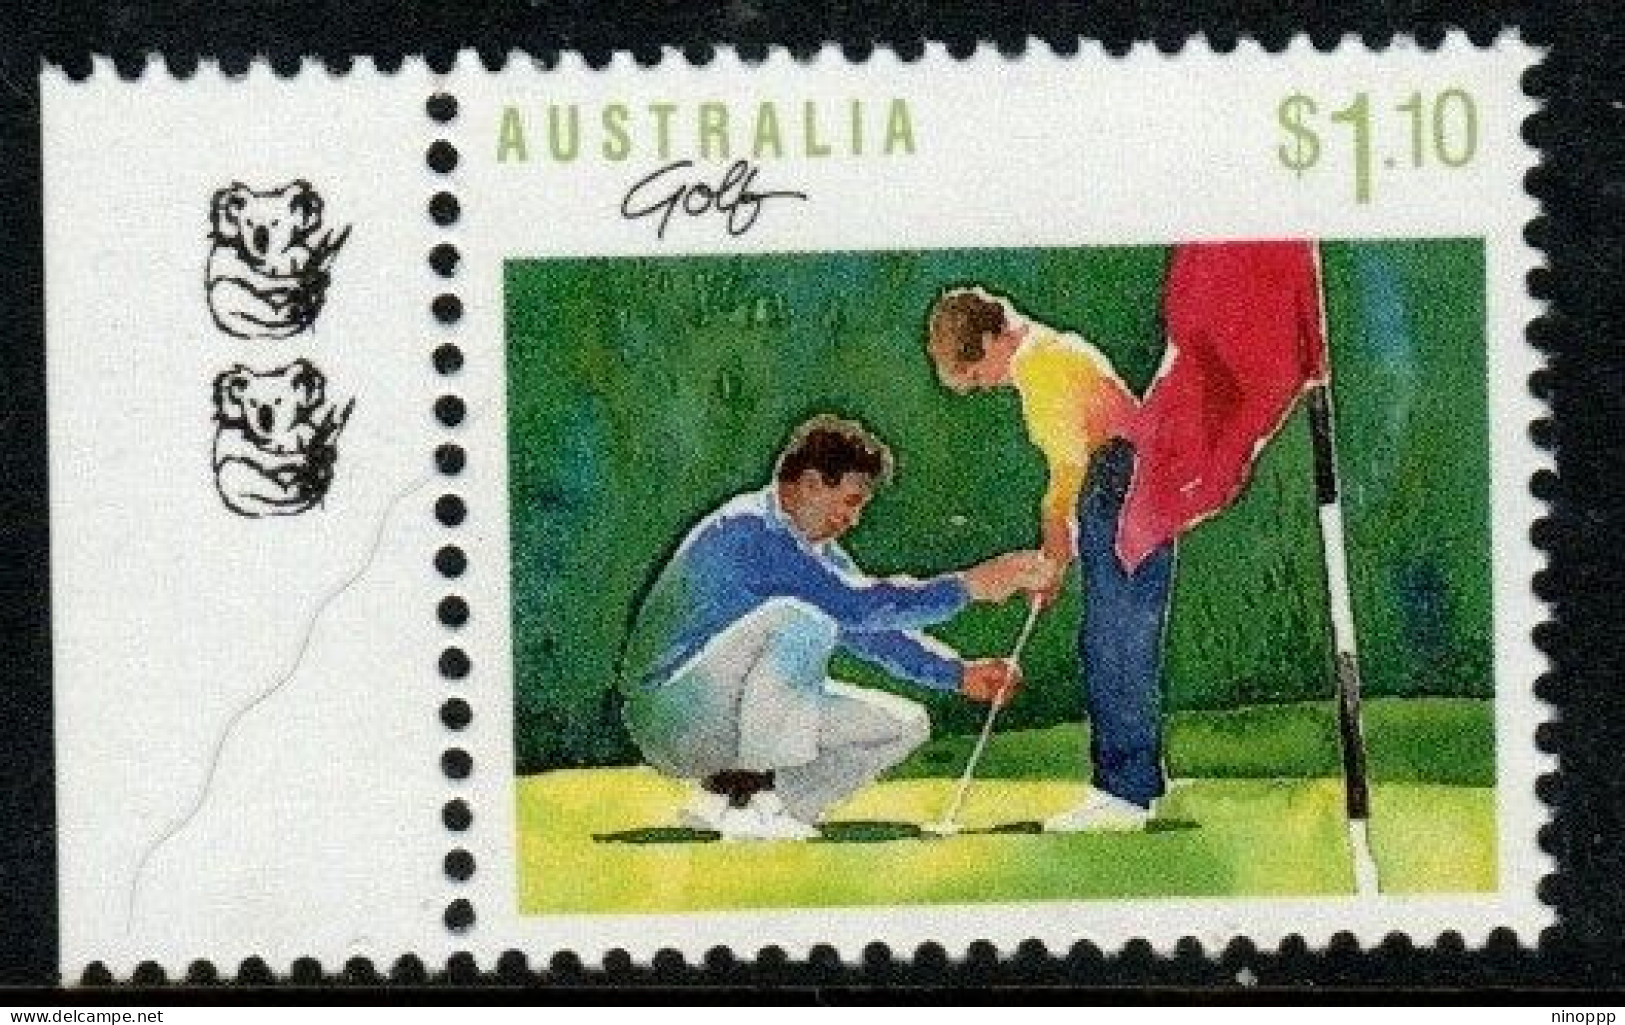 Australia Cat 1188a 1989 Sports $ 1.10 Golf, 2 Koalas Reprint,mint Never Hinged - Probe- Und Nachdrucke